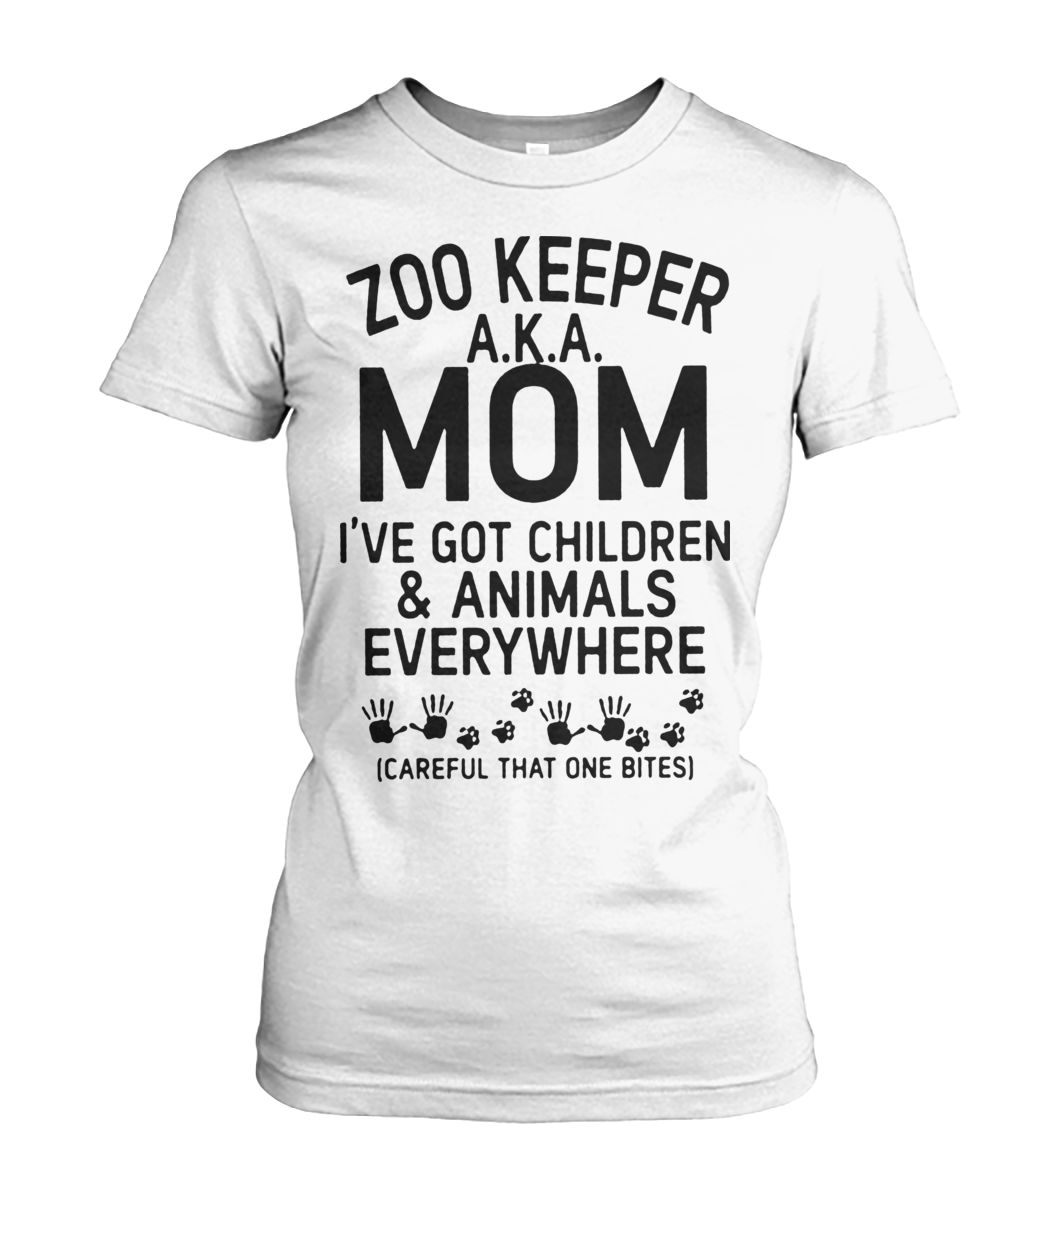 Zoo keeper aka mom I've got children and animals everywhere women's crew tee